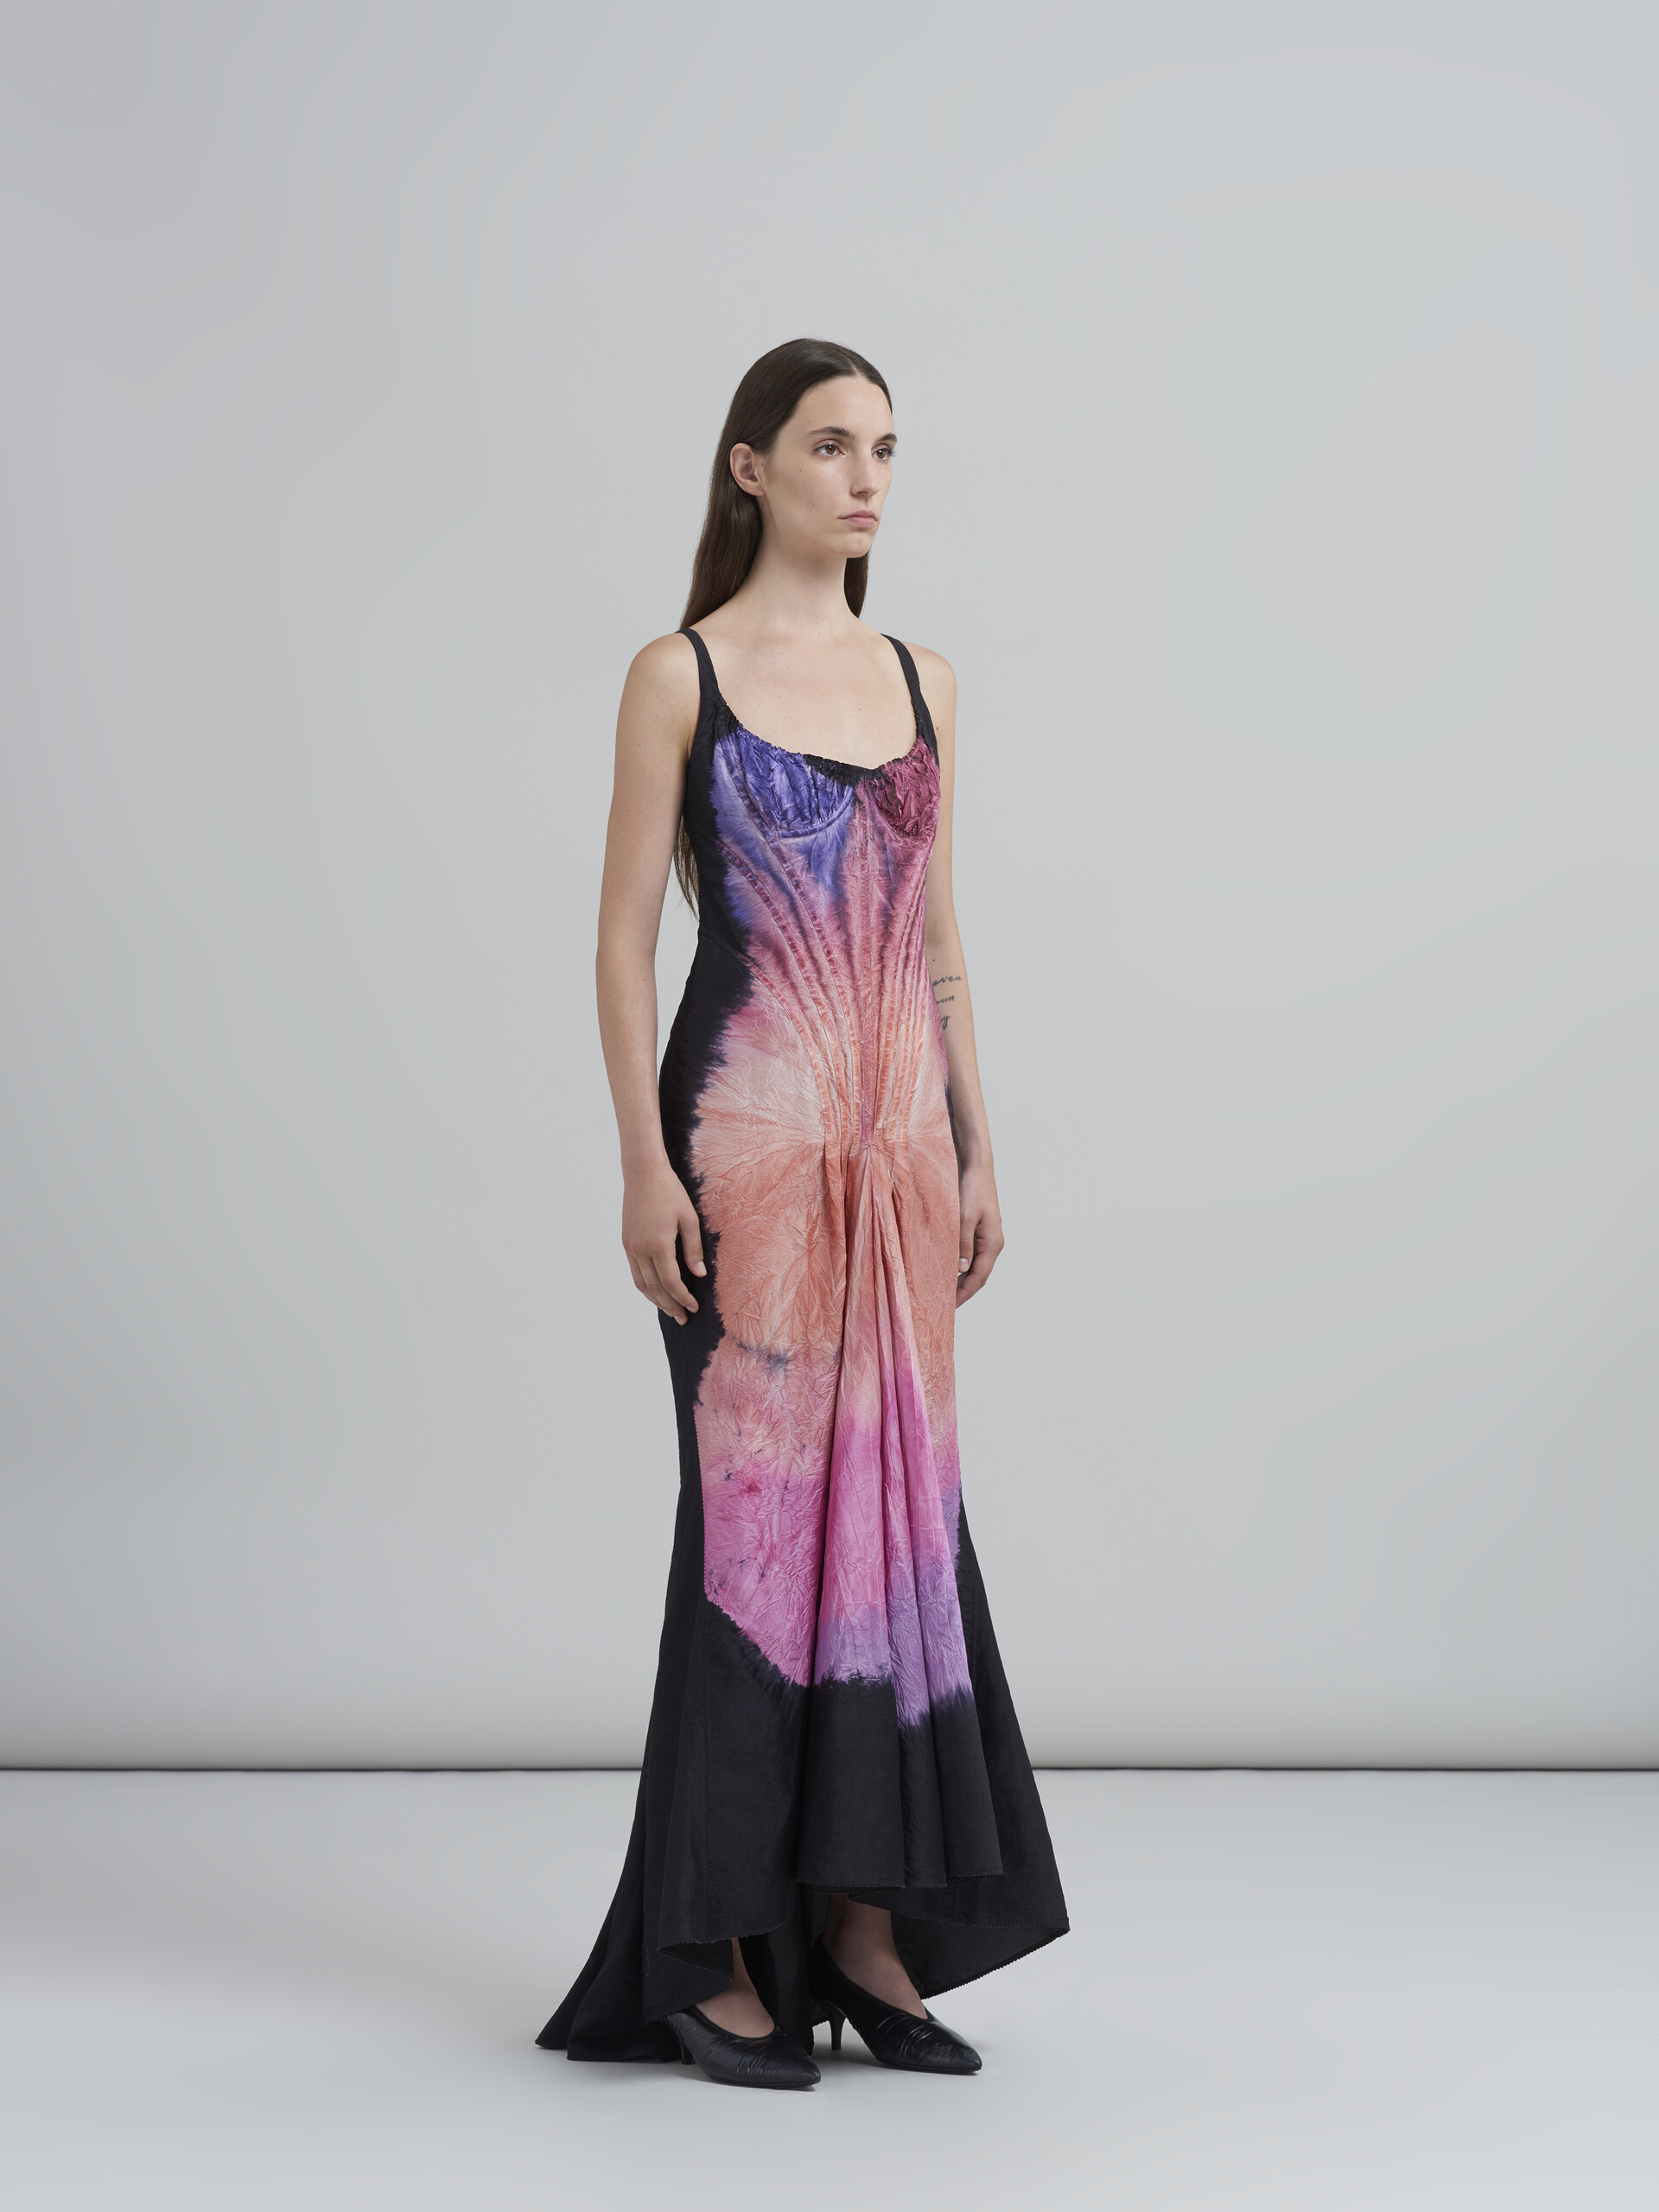 Dyed rainbow silk taffeta dress - Dresses - Image 6